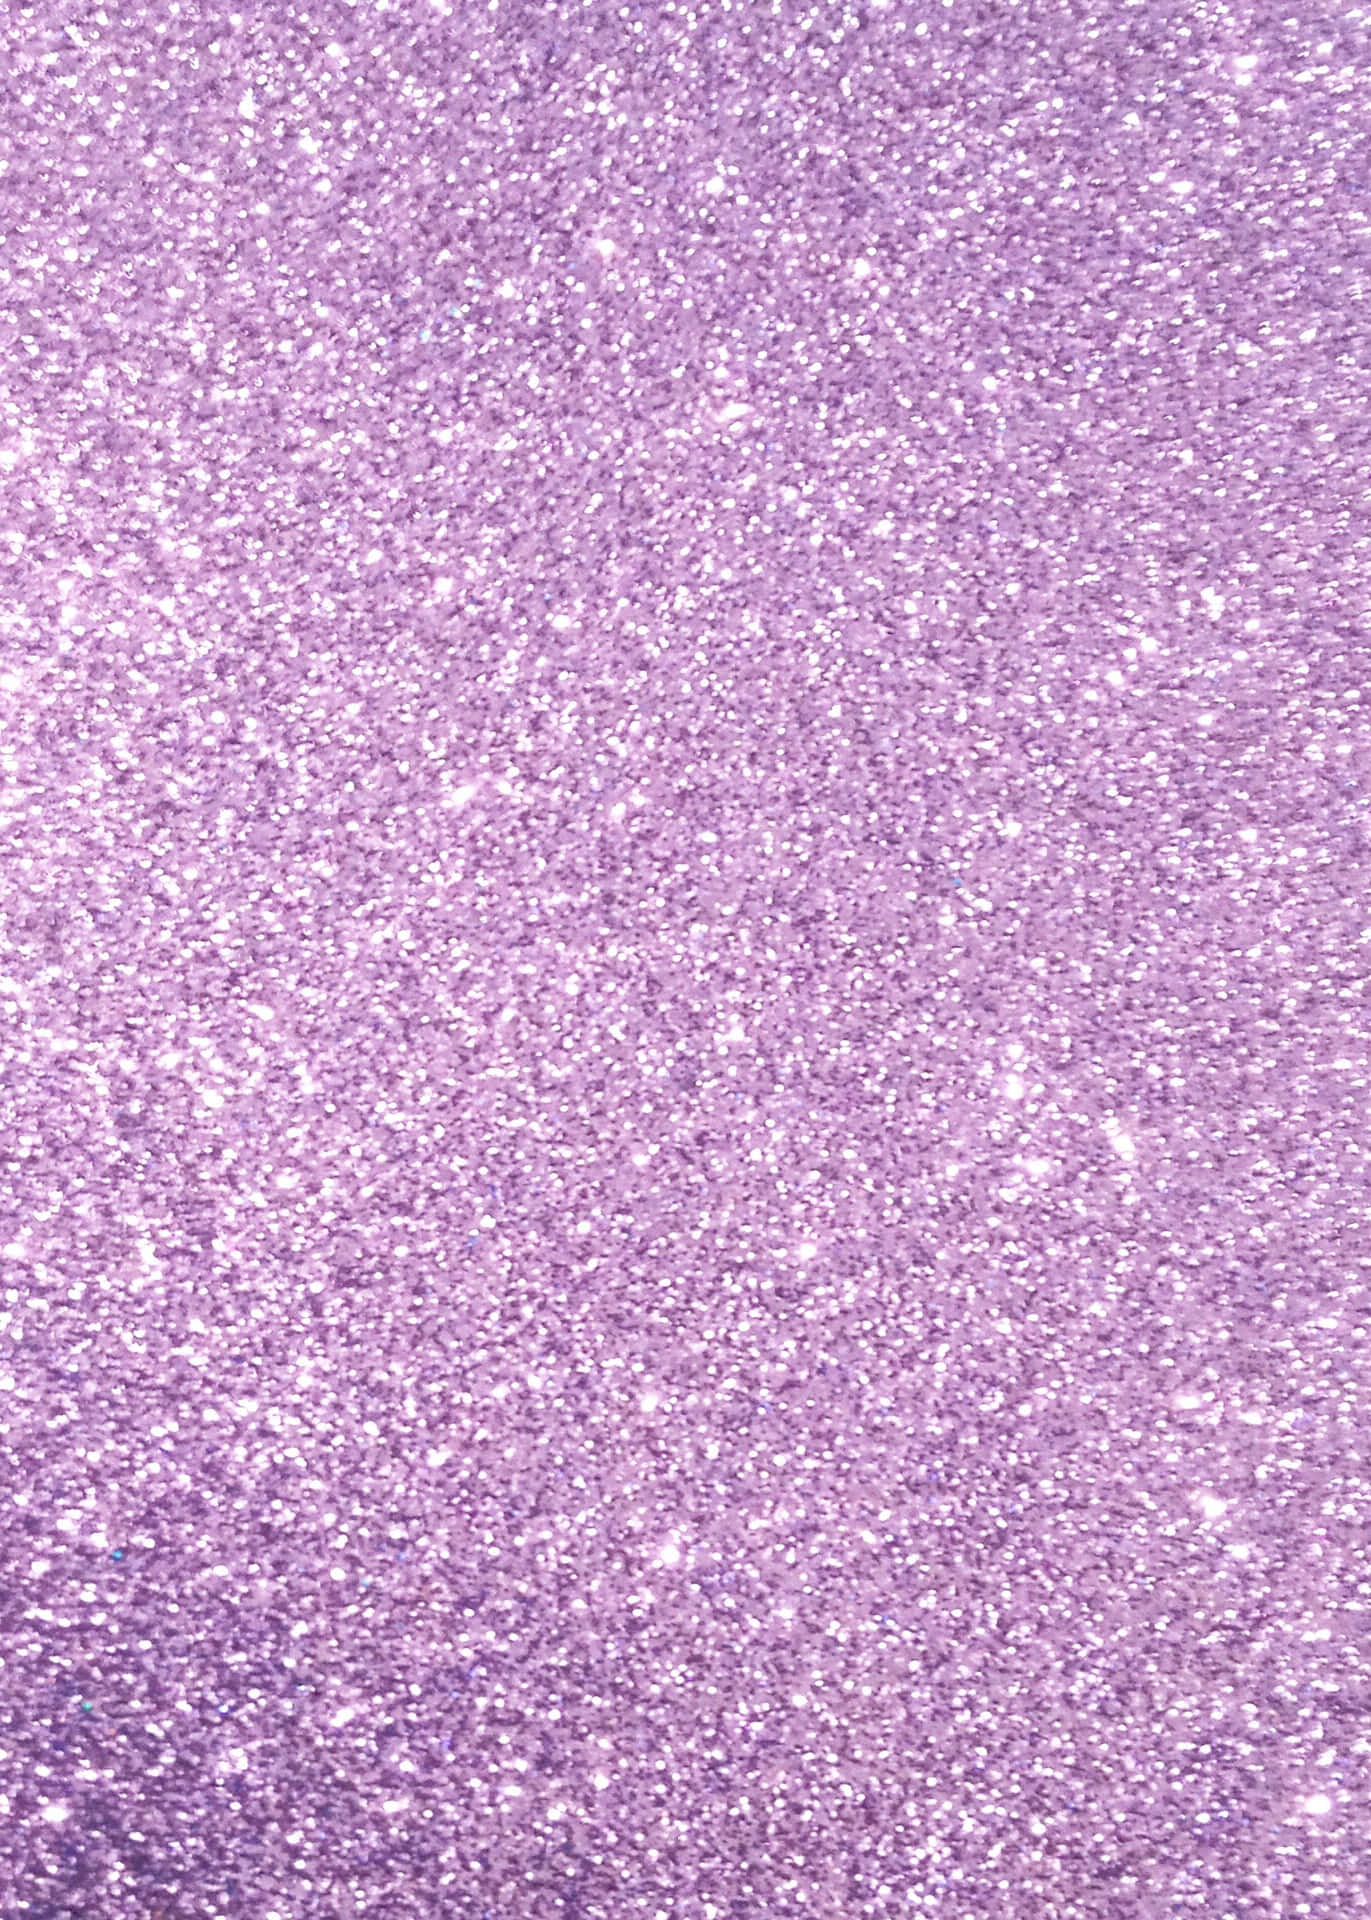 Purple Glitter Images  Free Download on Freepik